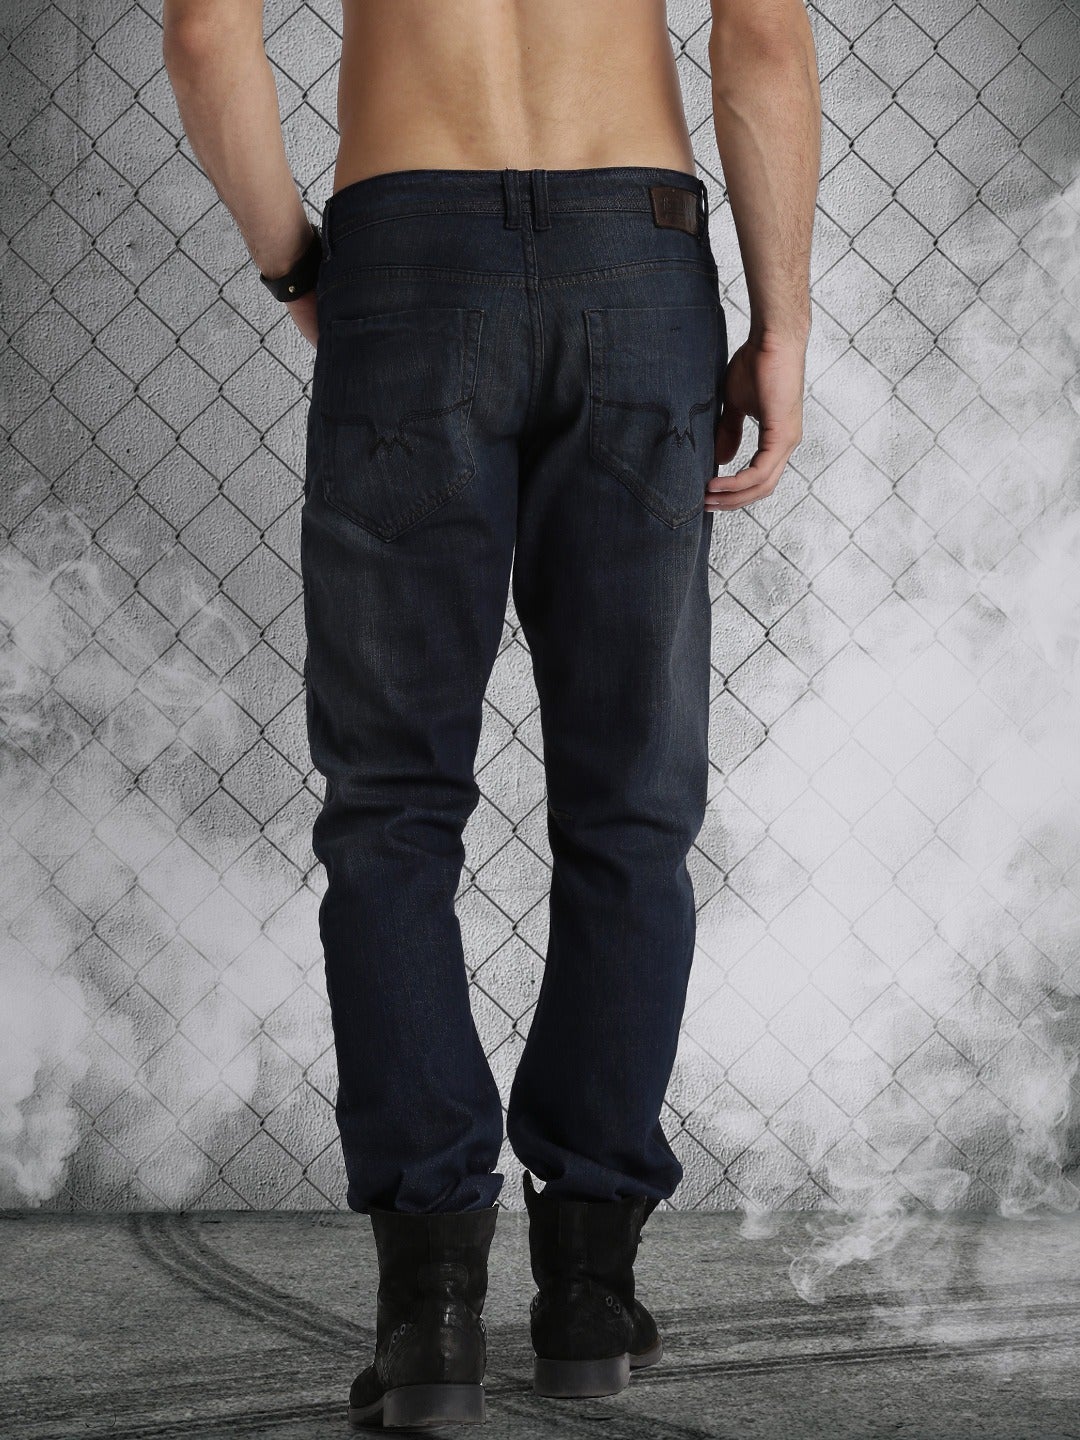 Blue Denim Clean Look Jeans For Men – G O O S E B E R Y®